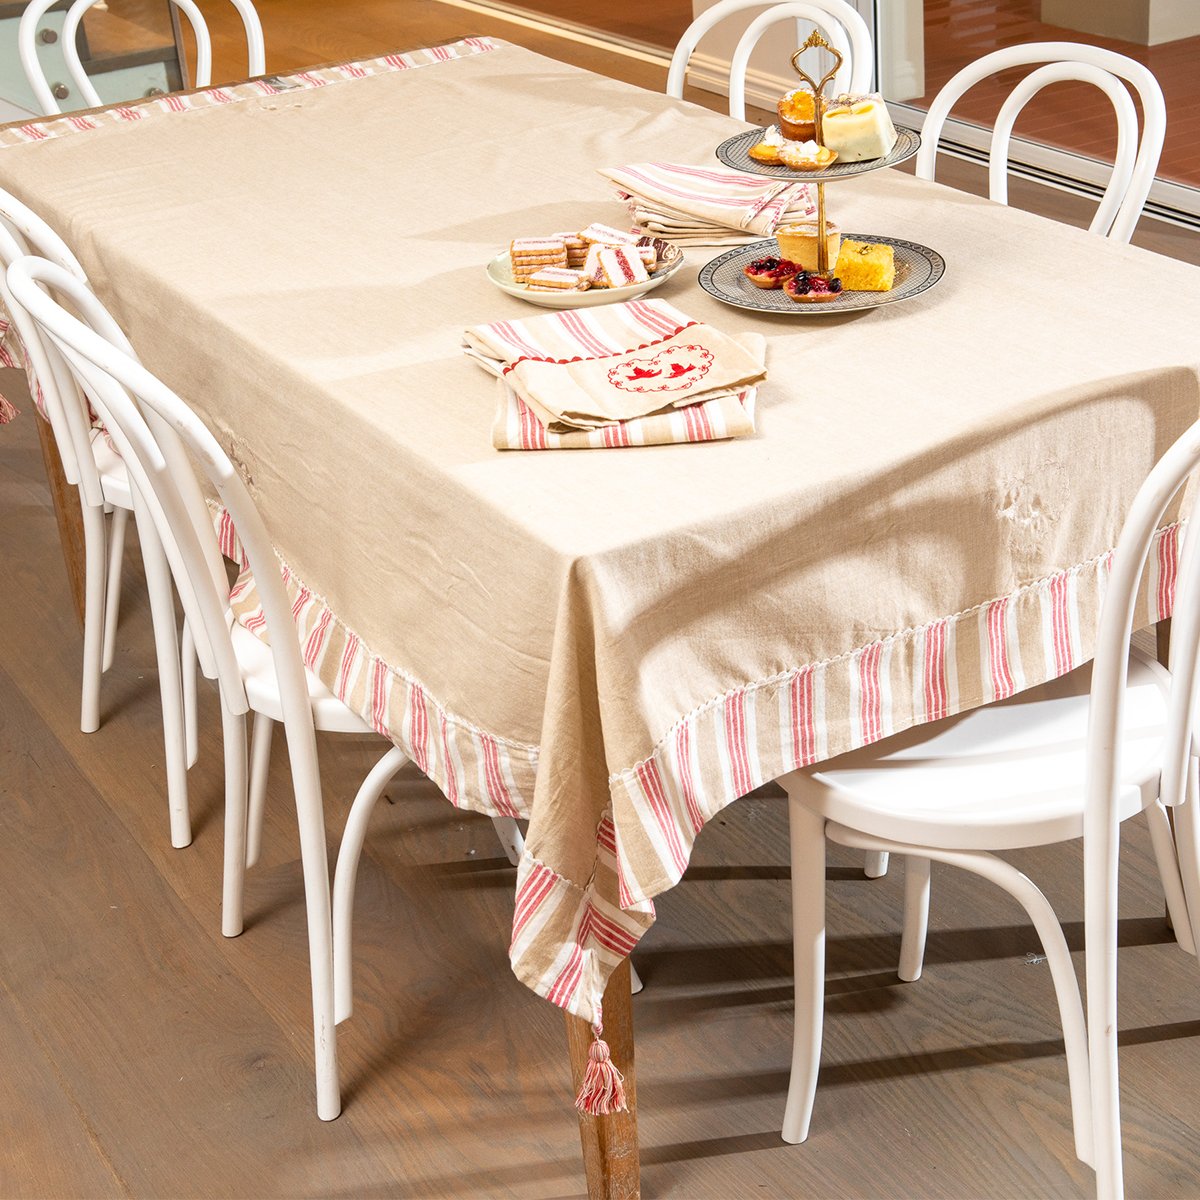 Handloom Cotton Woven Tablecloth - Beige - Notbrand